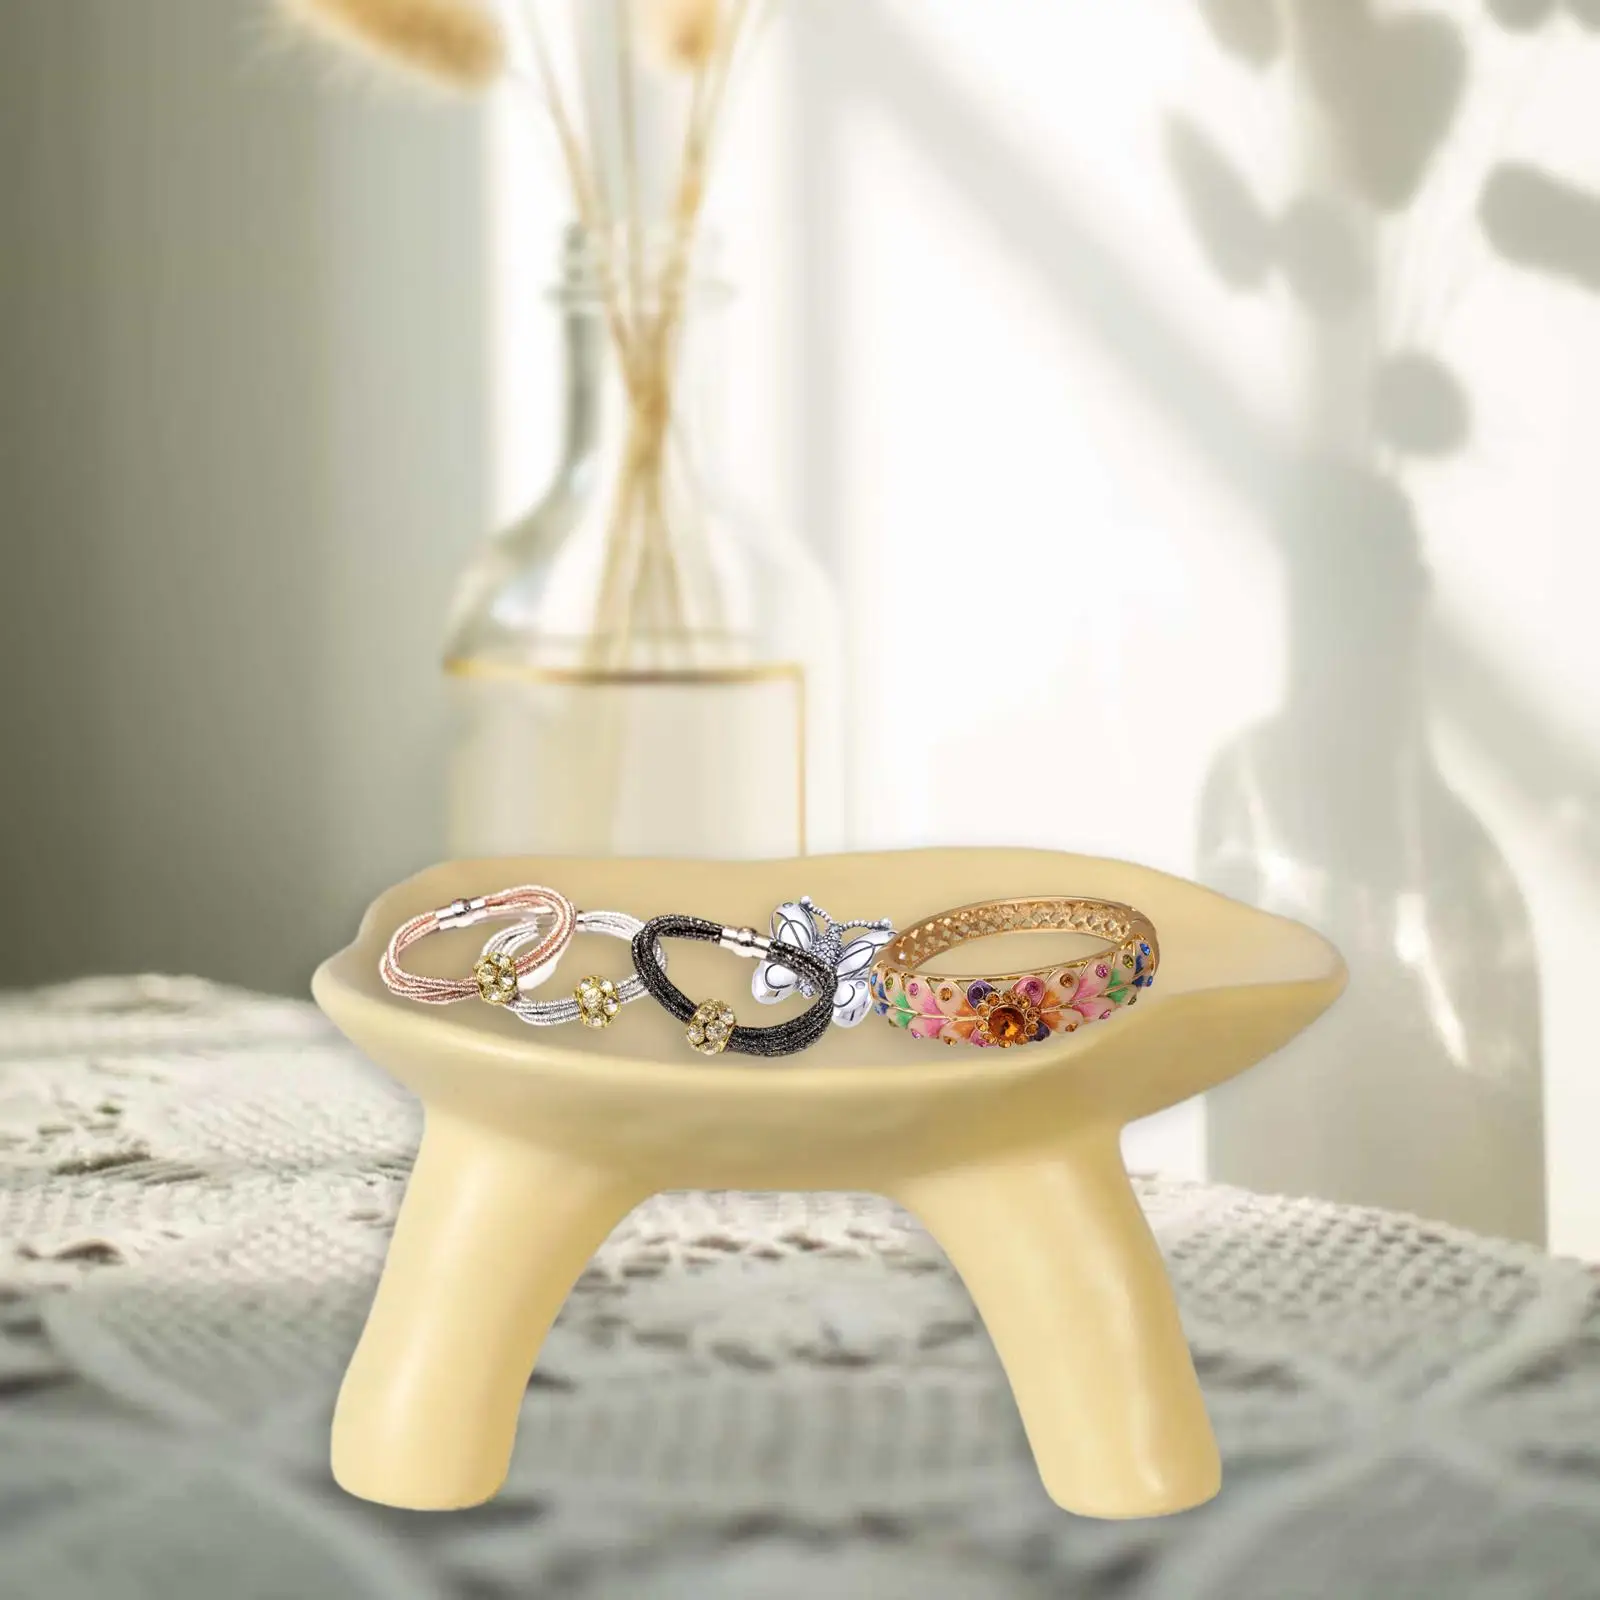 Jewelry Tray Earring Organizer Key Holder Decorative Tray Serving Tray Trinket Dish for Bathroom Countertop Home Desktop Dinner